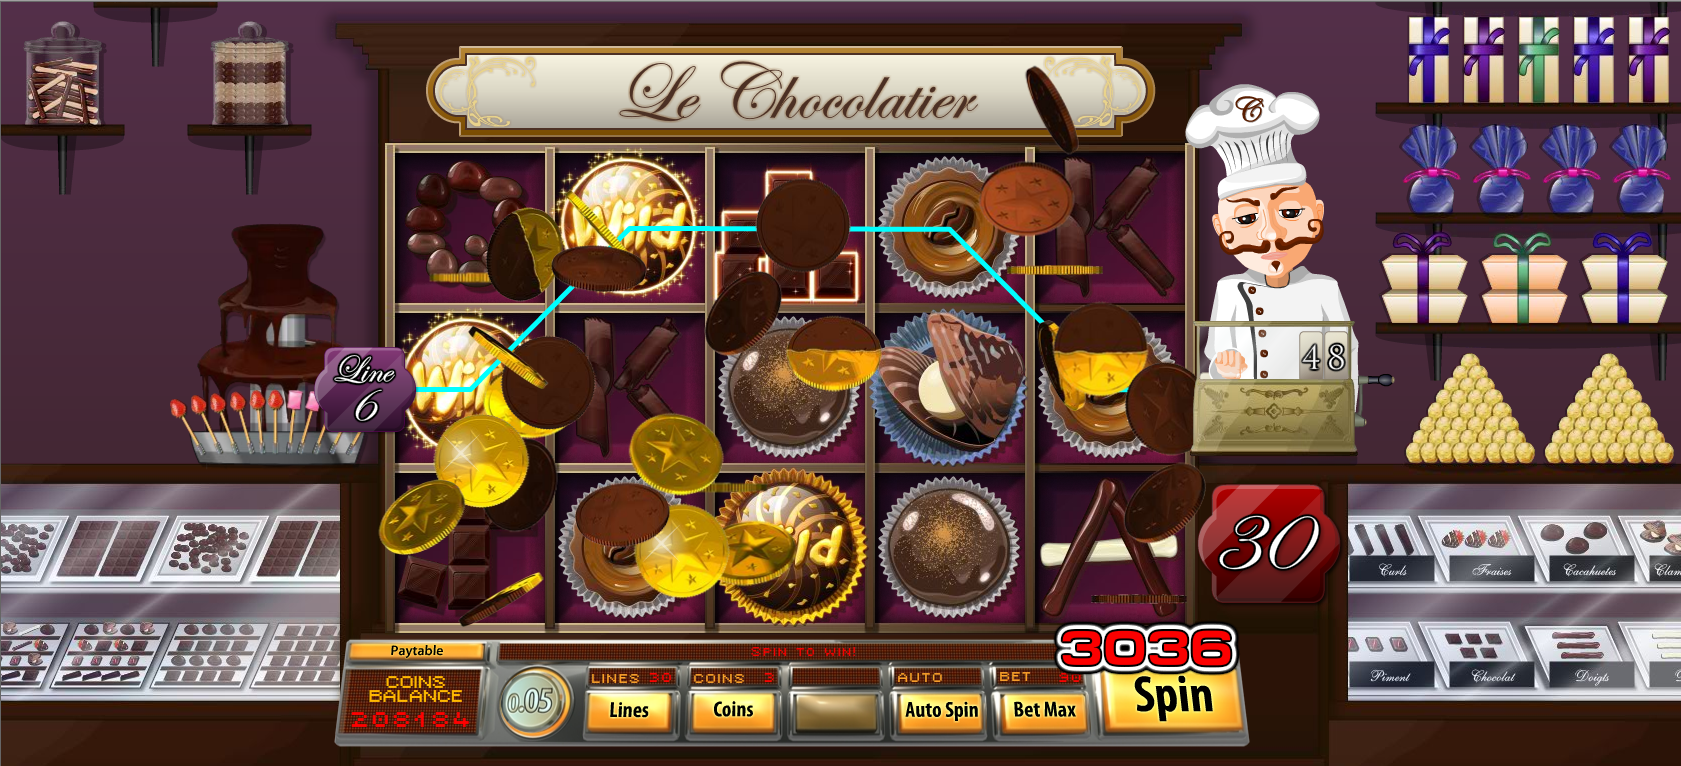 Le Chocolatier Slot Game